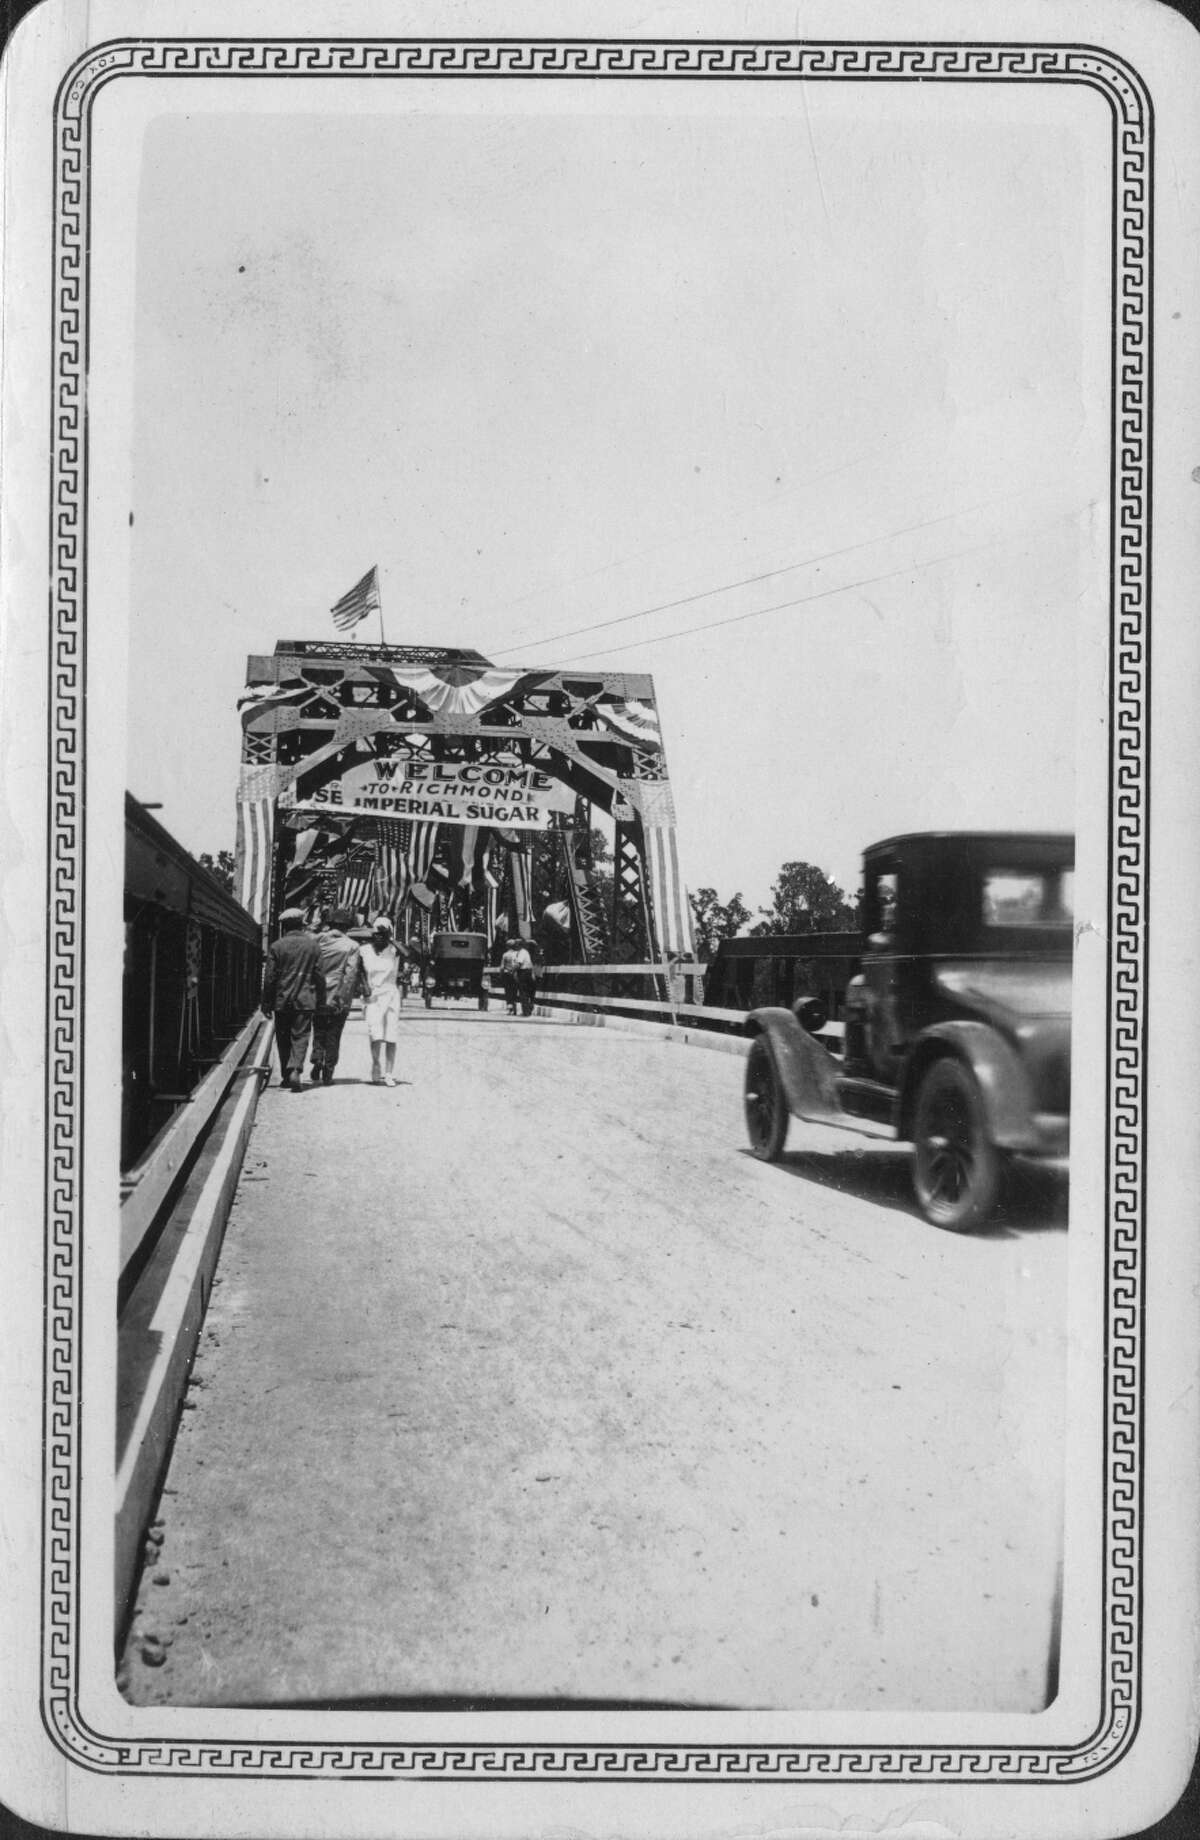 Opening of the Brazos River bridge in 1925